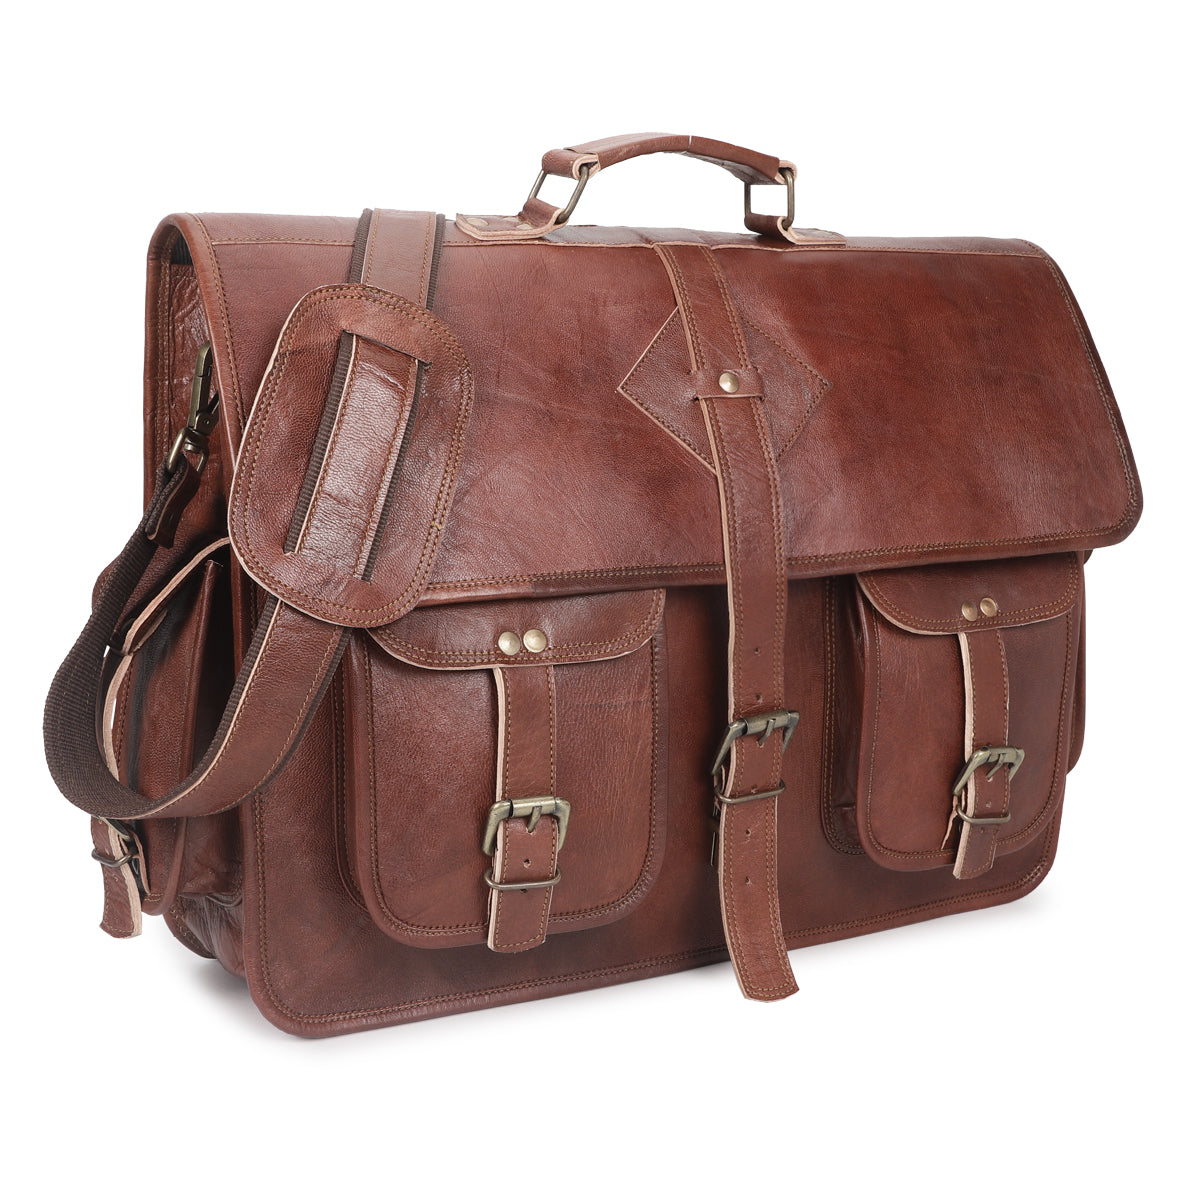 rustic brown leather messenger bag